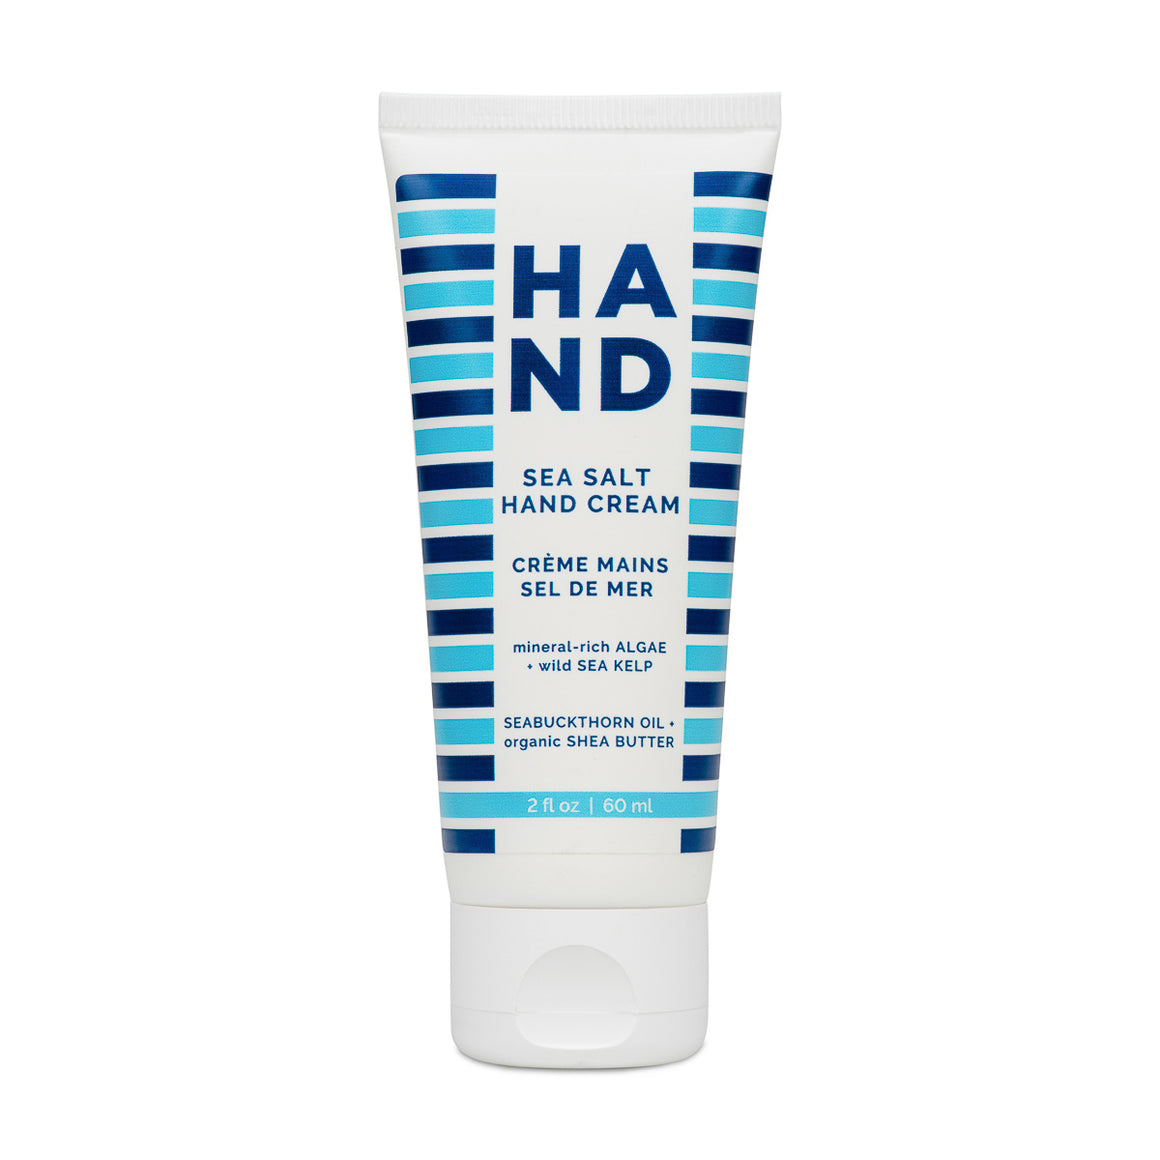 HAND Sea Salt Hand Cream